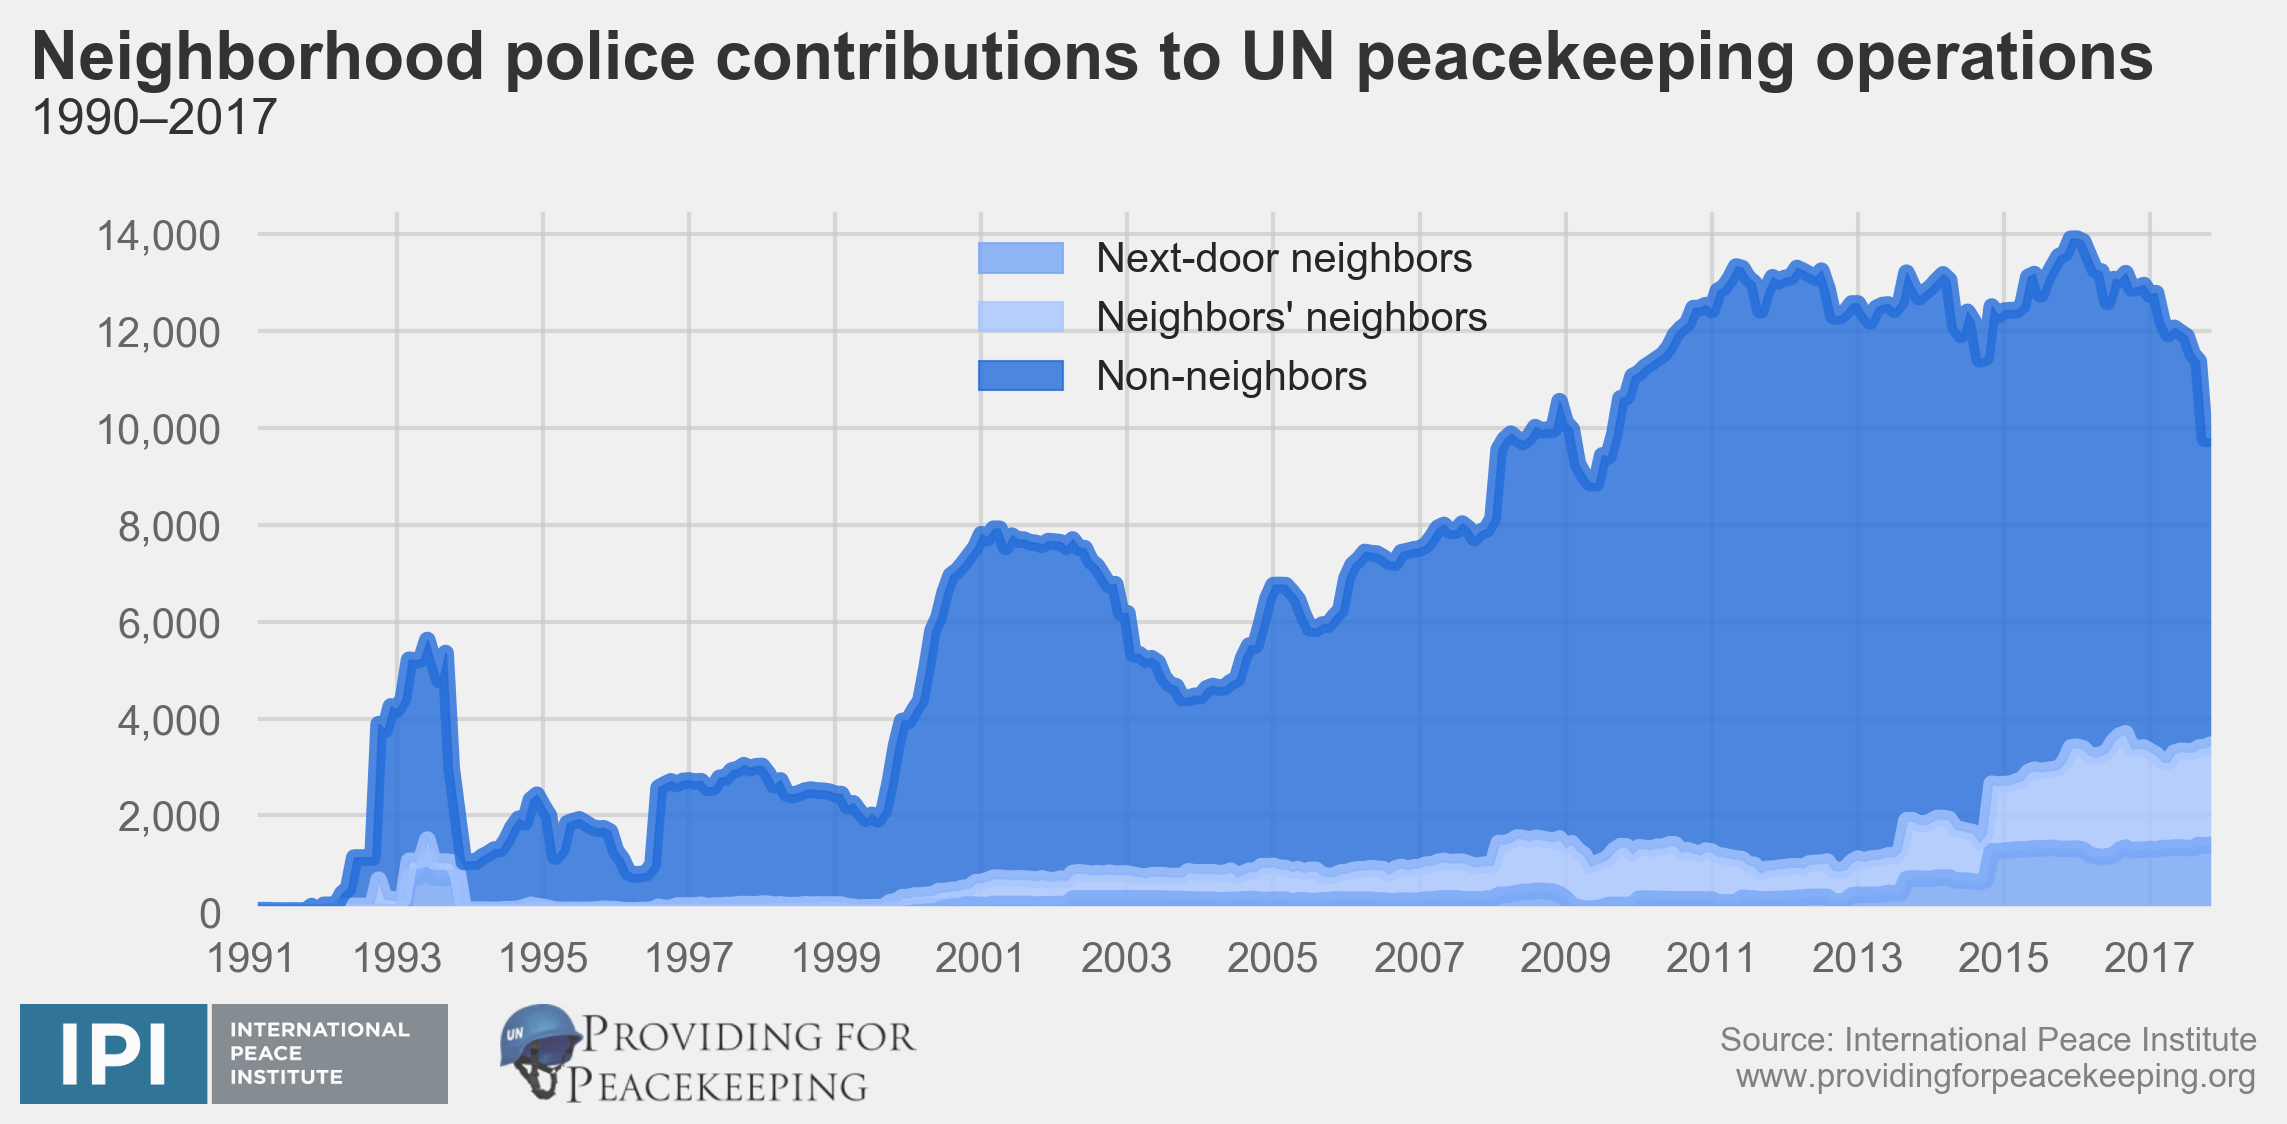 Neighborhood Dynamics in UN Peacekeeping Operations, 1990–2017